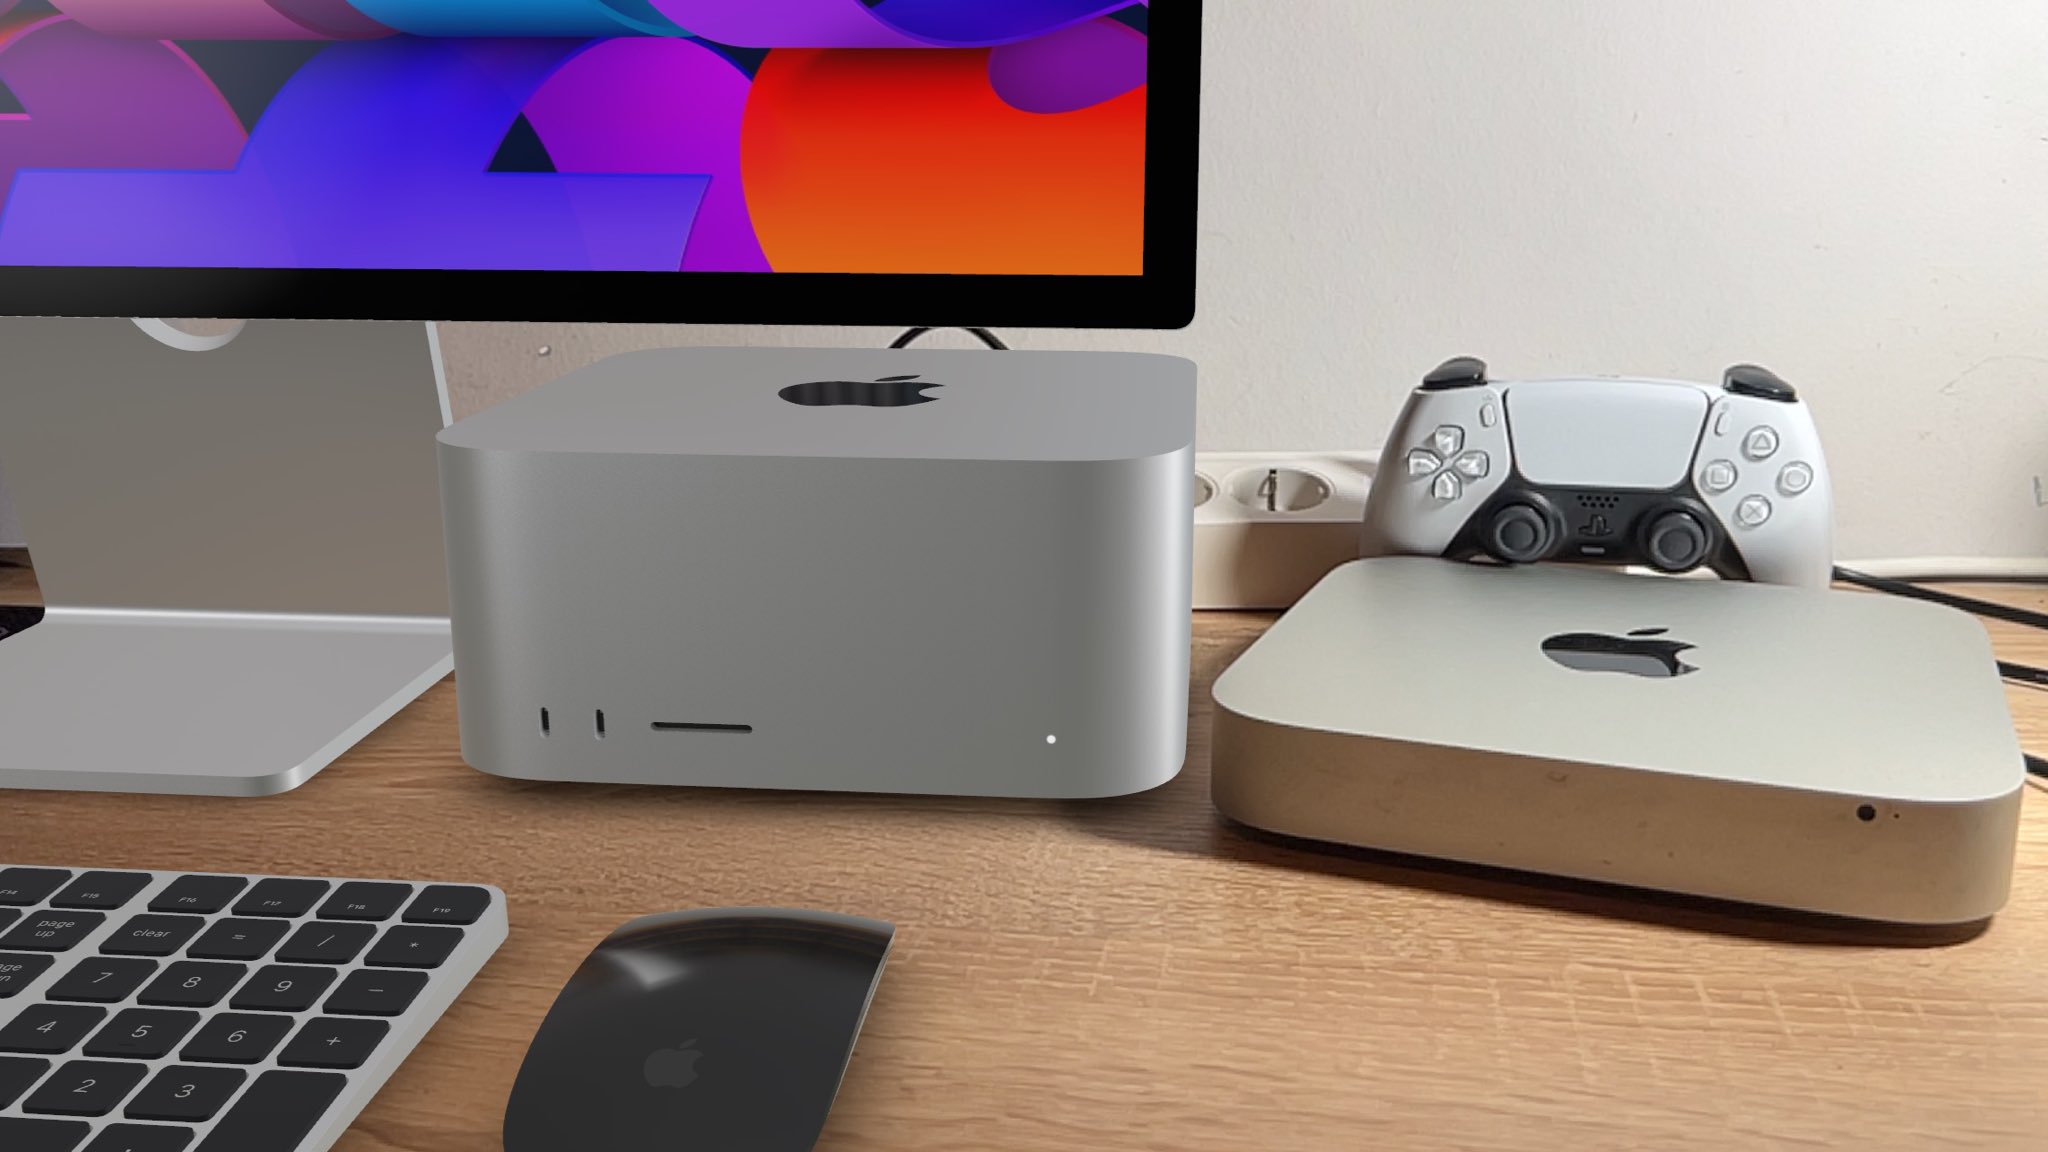 Should You Buy A Mac Mini Or Mac Studio? We Compare Them - UPDATED